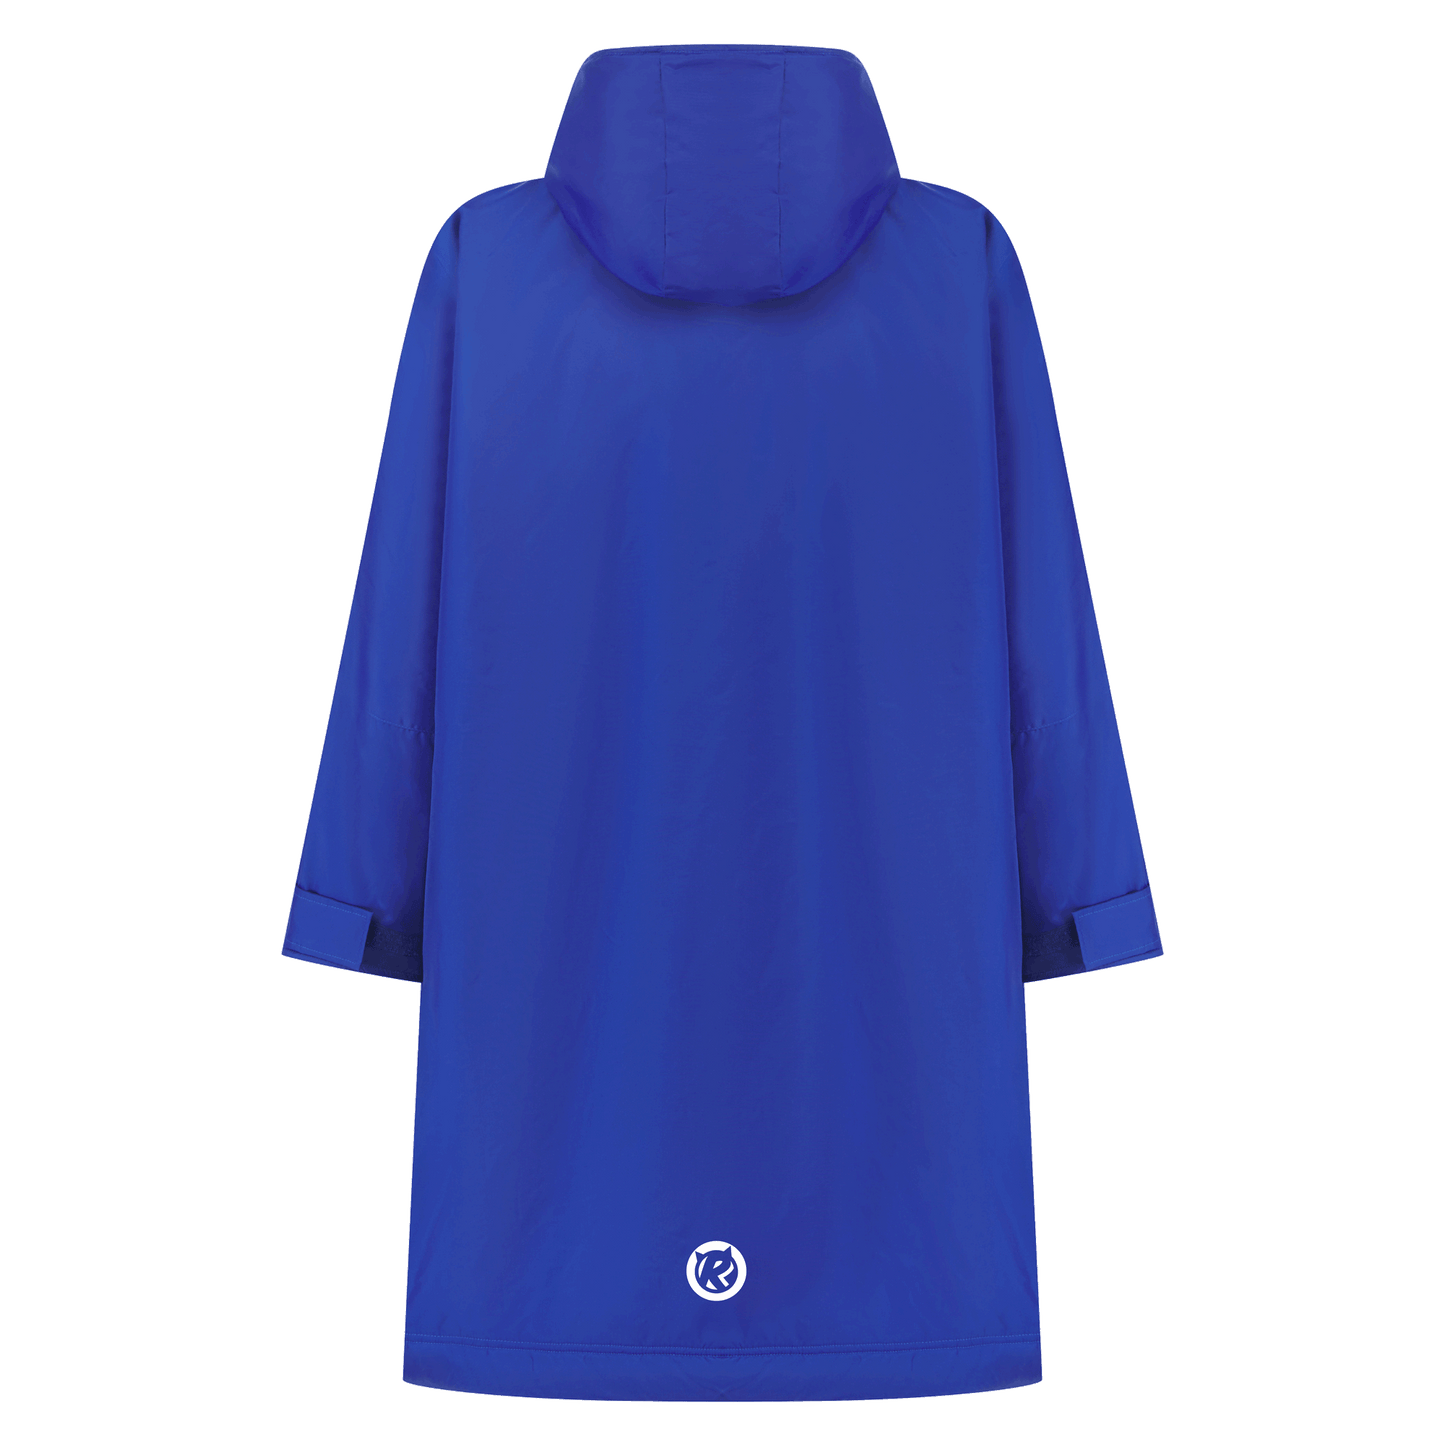 Rat Robe - Sherpa Fleece Lined Changing Robe - Blue